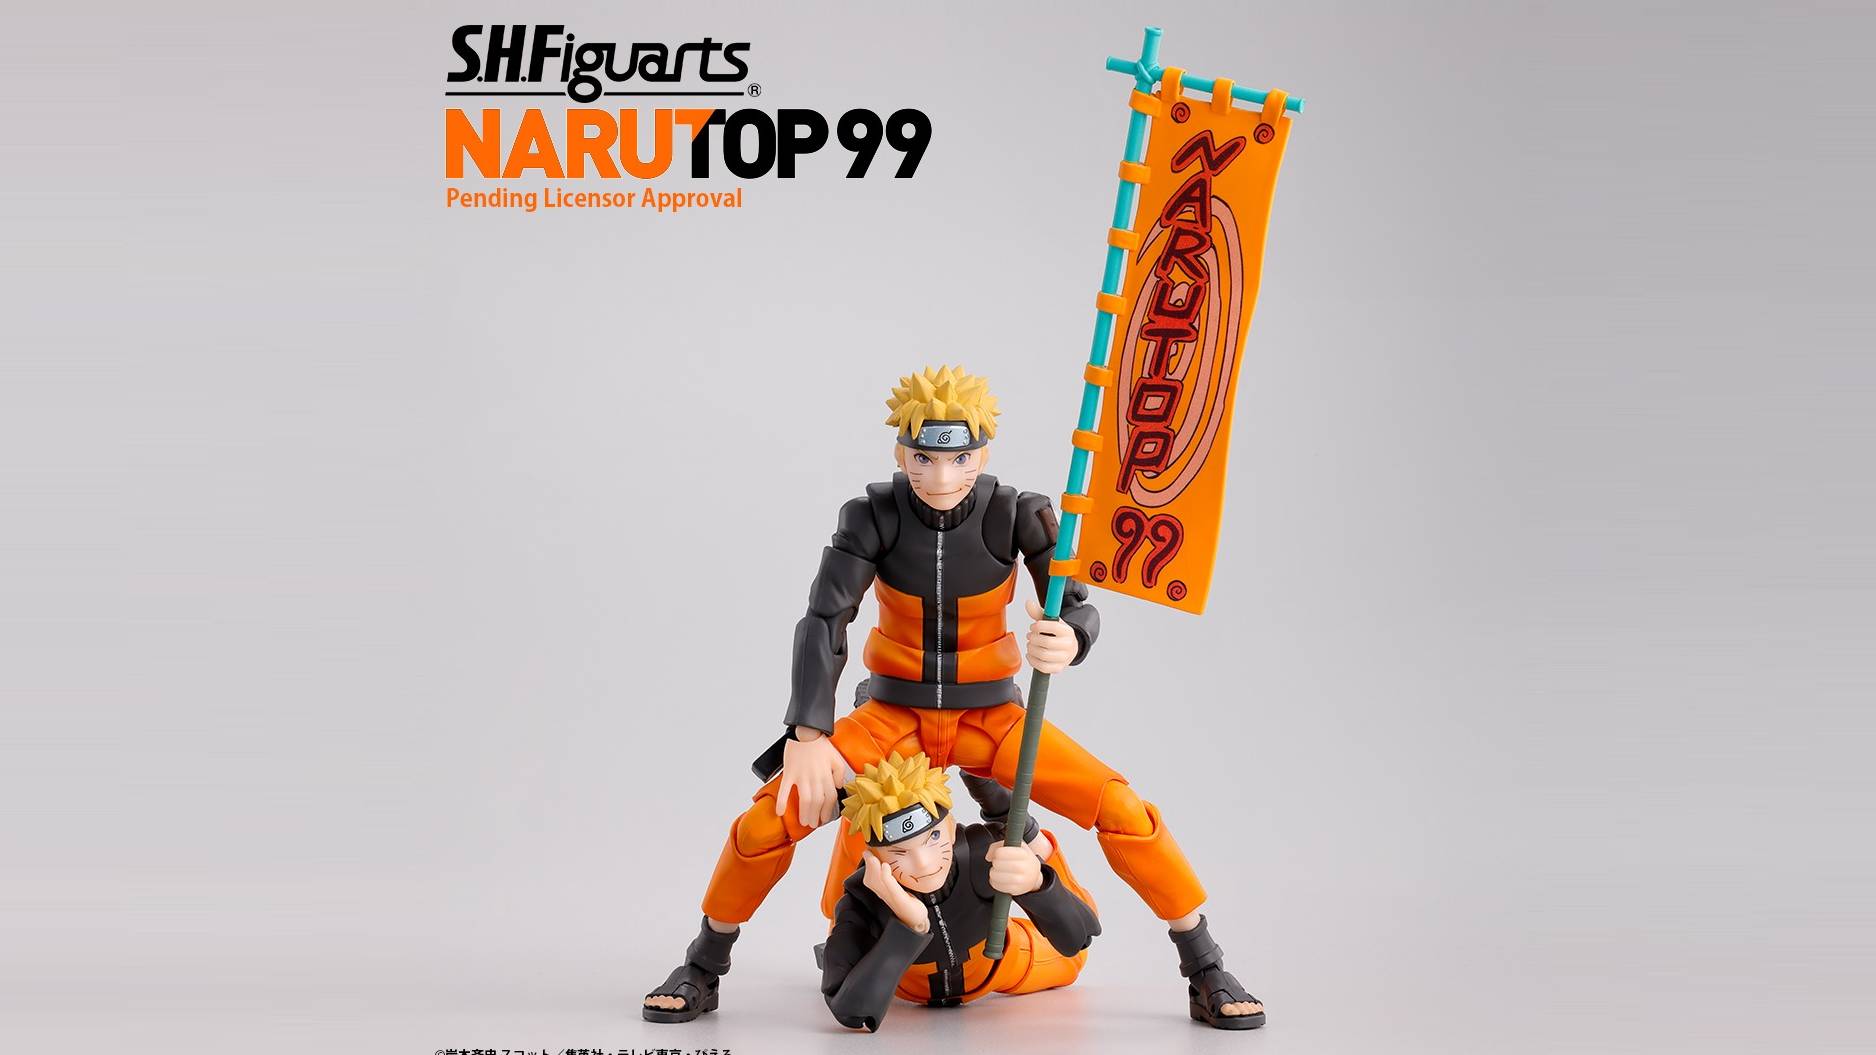 SH Figuarts Narutop 99 Character Poll Naruto Figures Coming